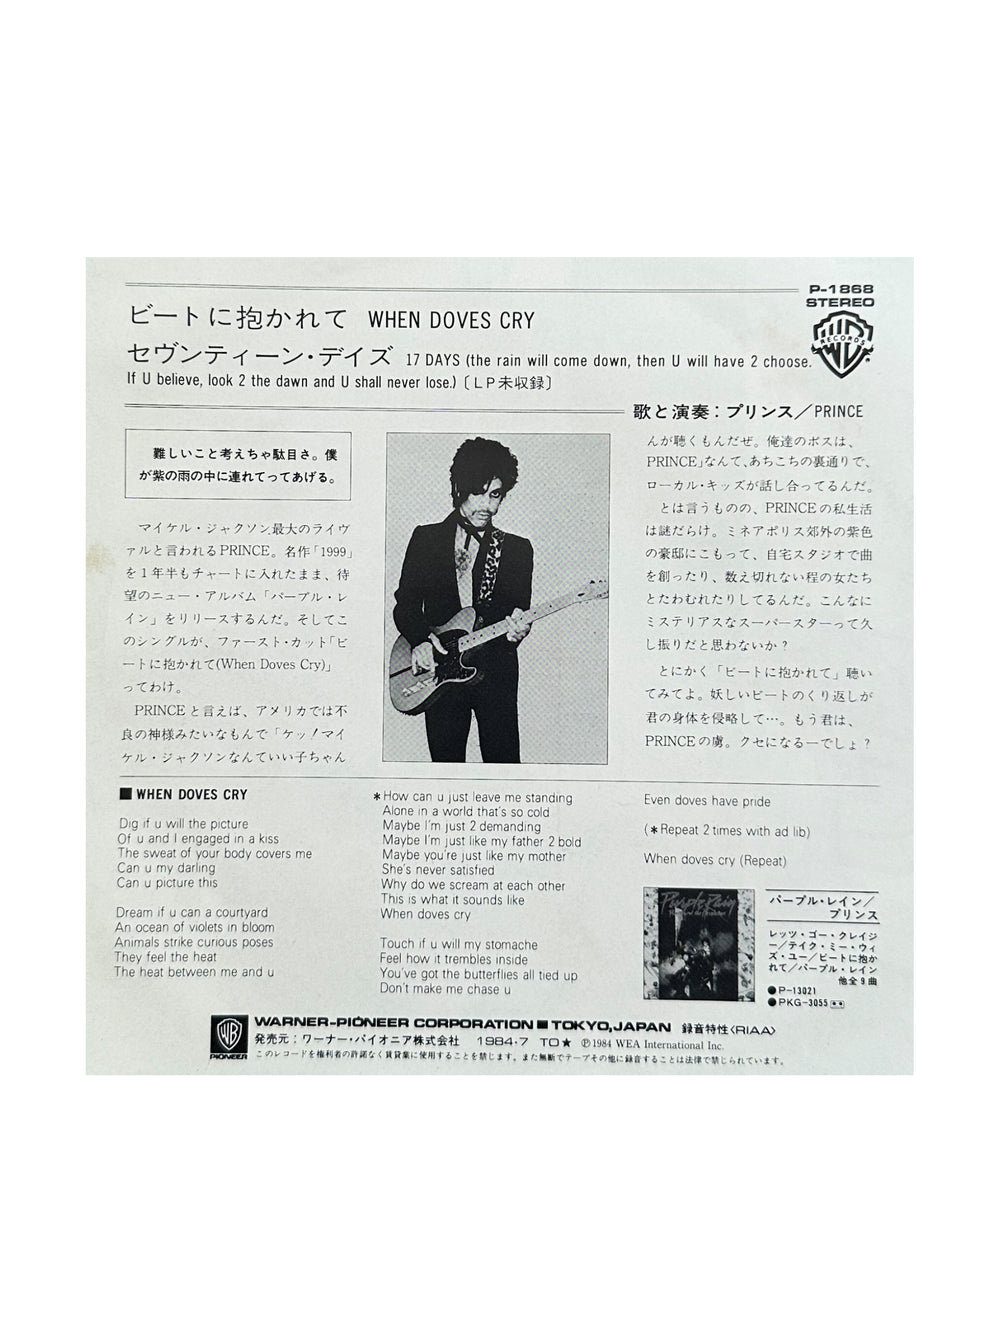 Prince – When Doves Cry Vinyl 7" Single Purple Vinyl Japan Preloved: 1984